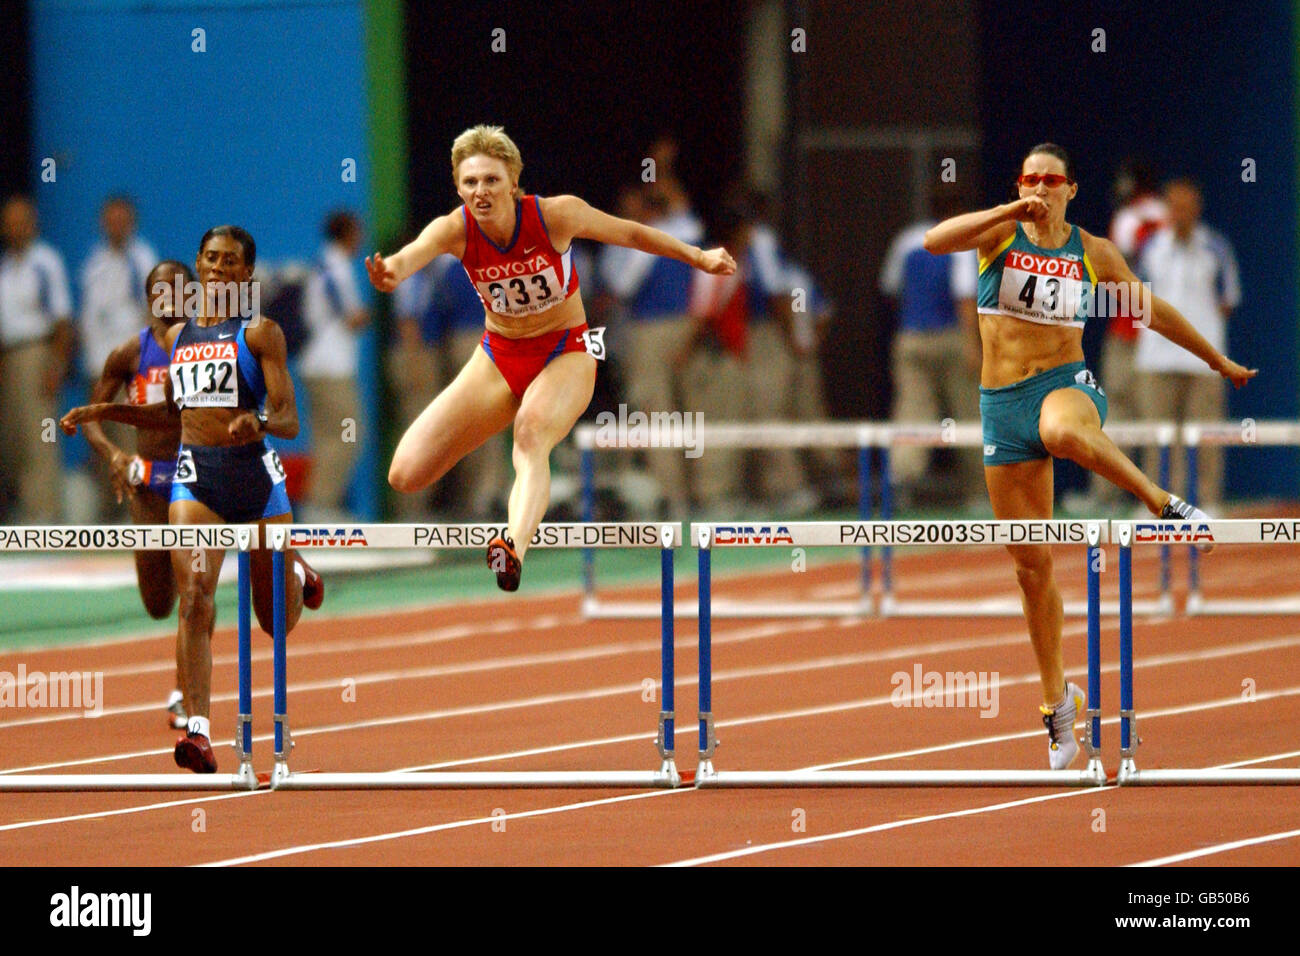 Russia's Yuliya Pechonkina (933) leads going into the final hurdle from Australia's Jana Pittman (43) and USA's Sandra Glover (1132) Stock Photo